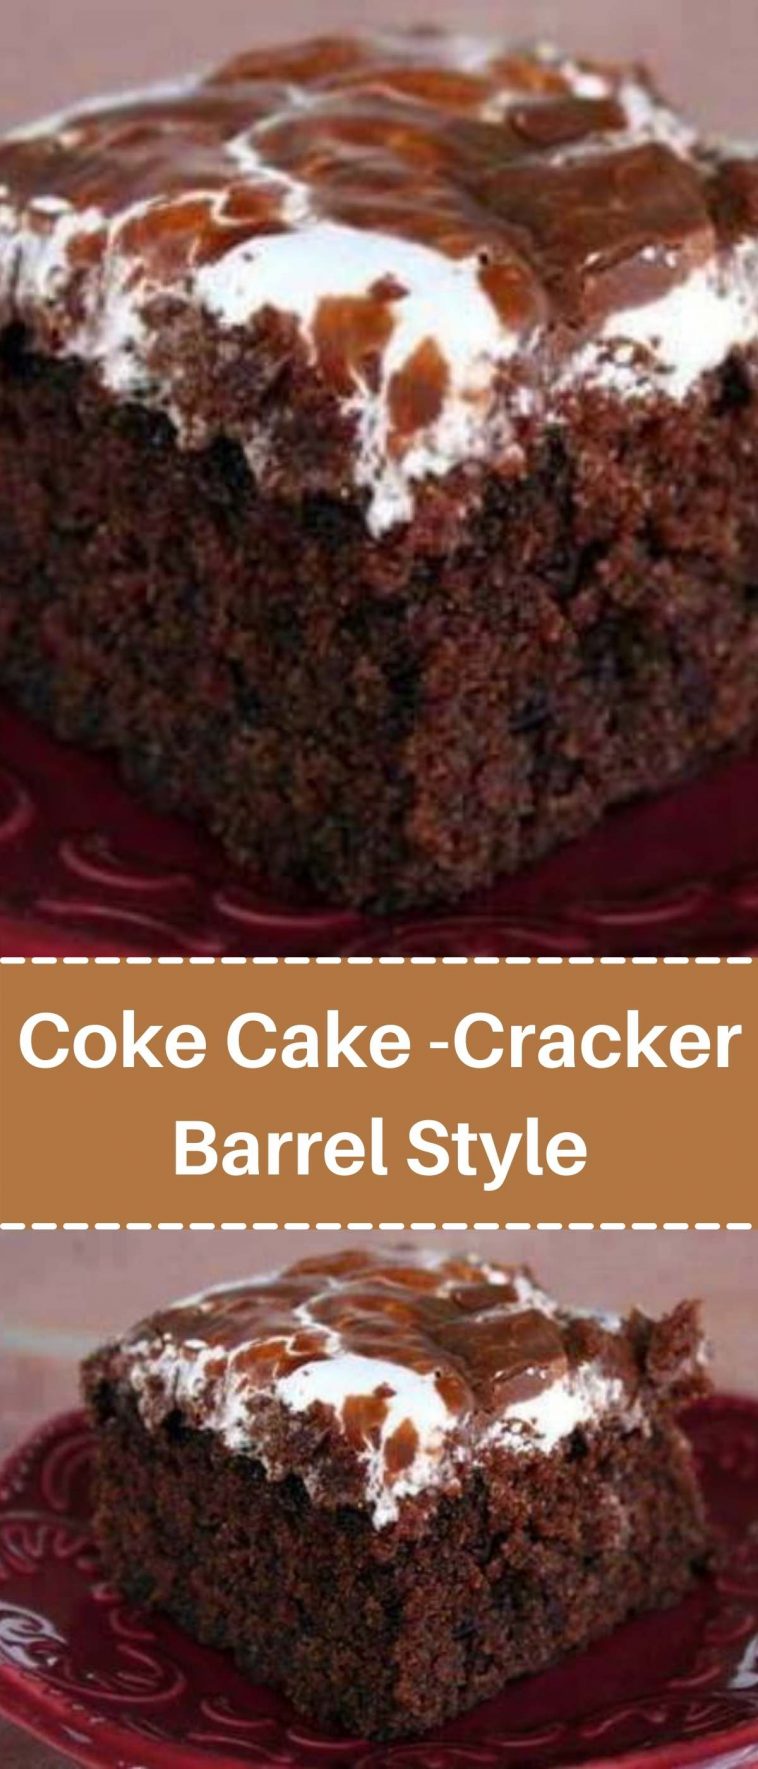 Coke Cake -Cracker Barrel Style